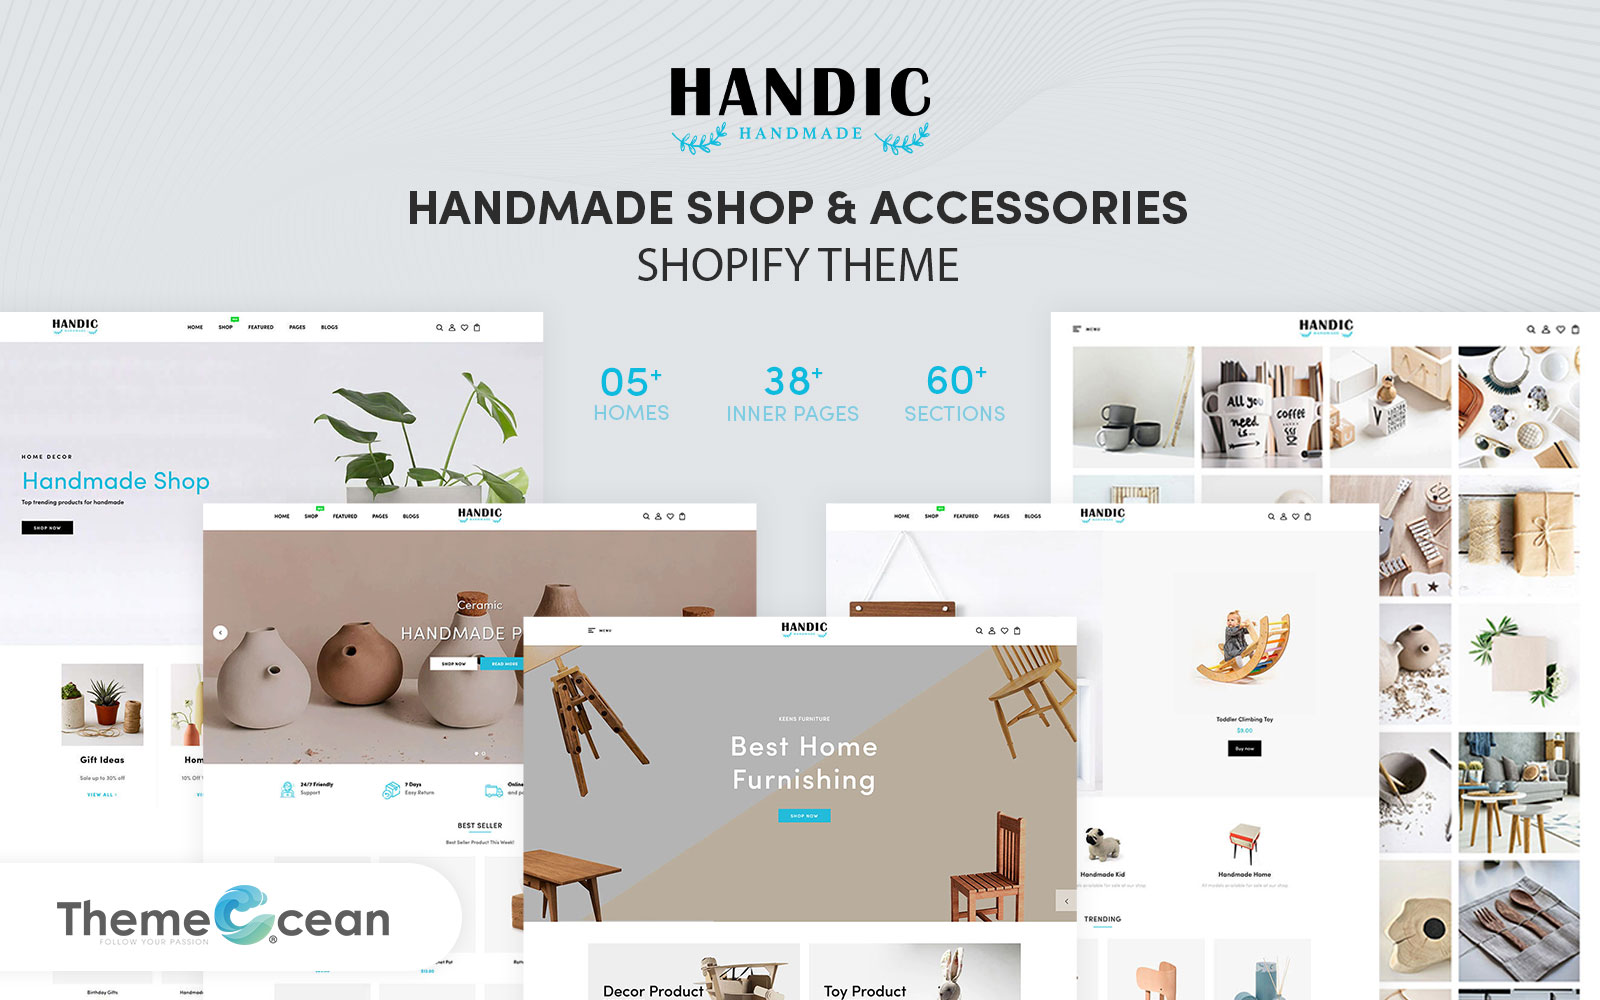 Handic - Handmade Shop & Accessories Shopify Theme